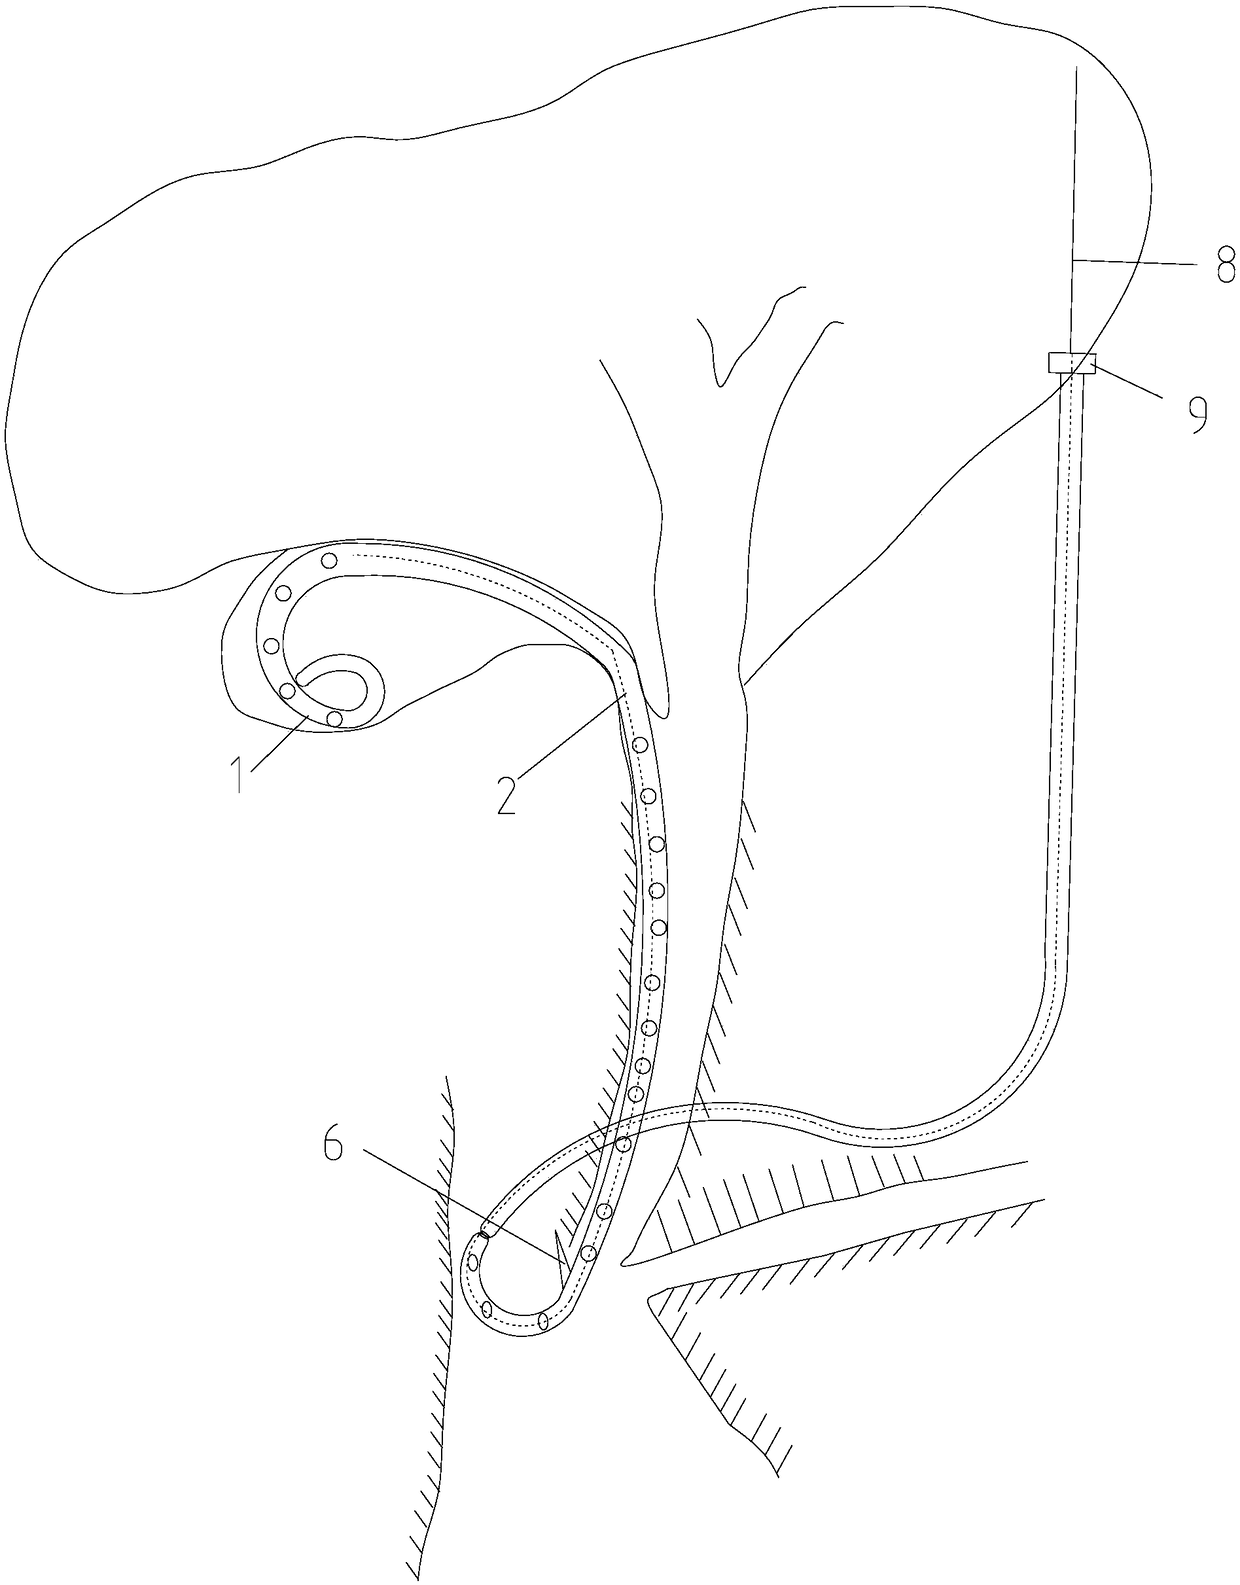 Internal gallbladder drainage tube